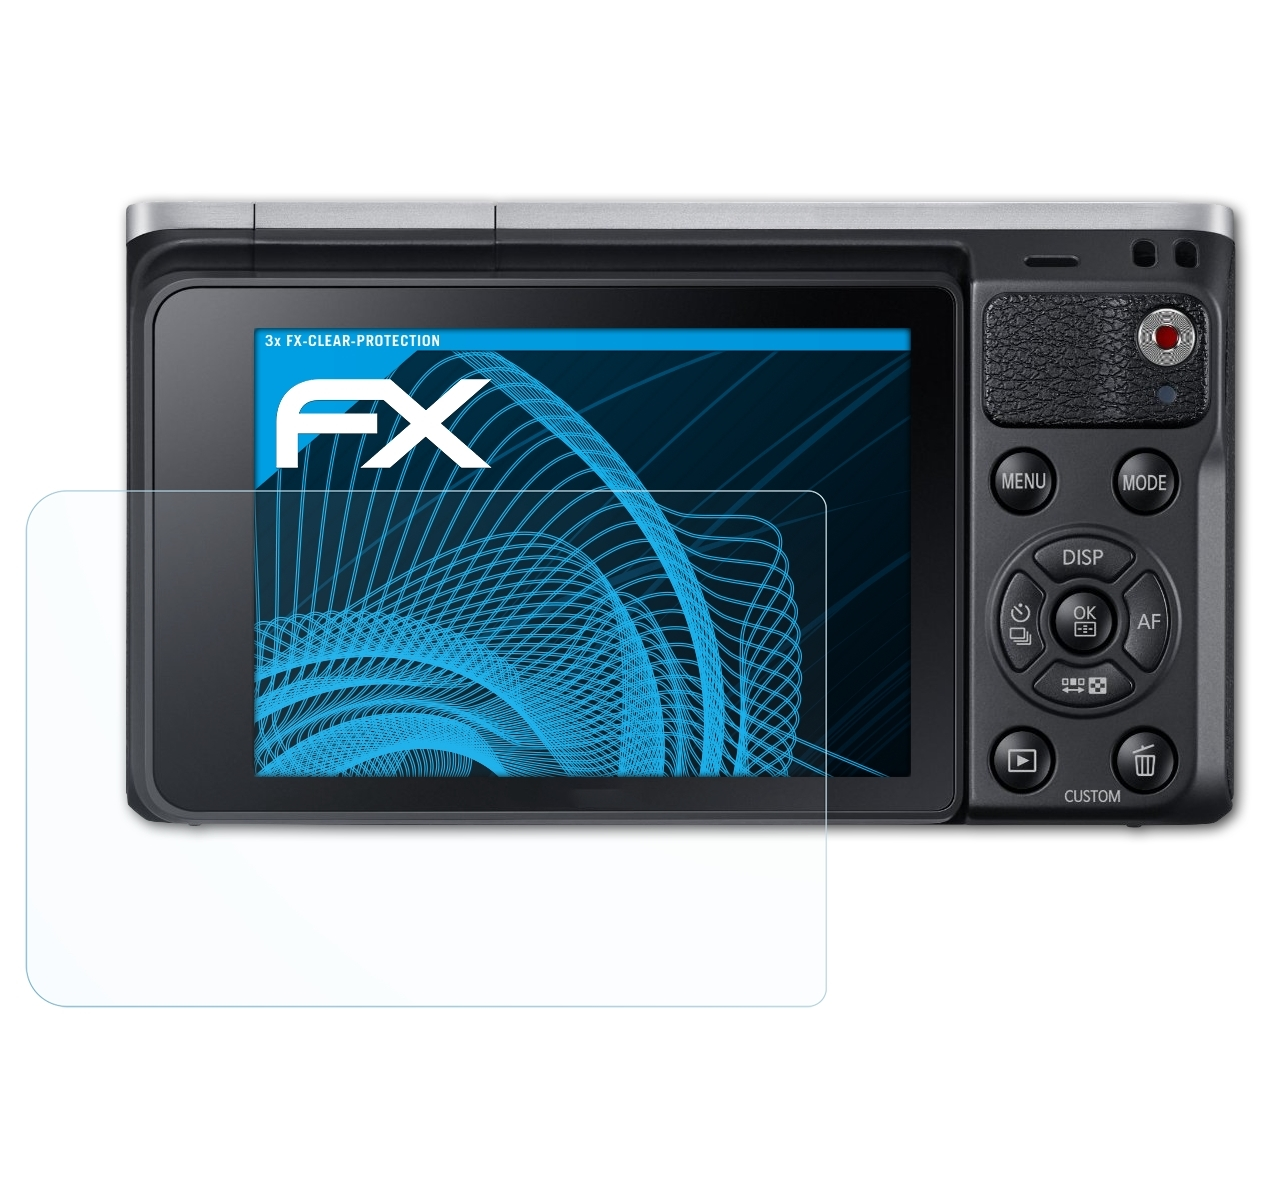 mini) 3x Displayschutz(für ATFOLIX FX-Clear Samsung NX